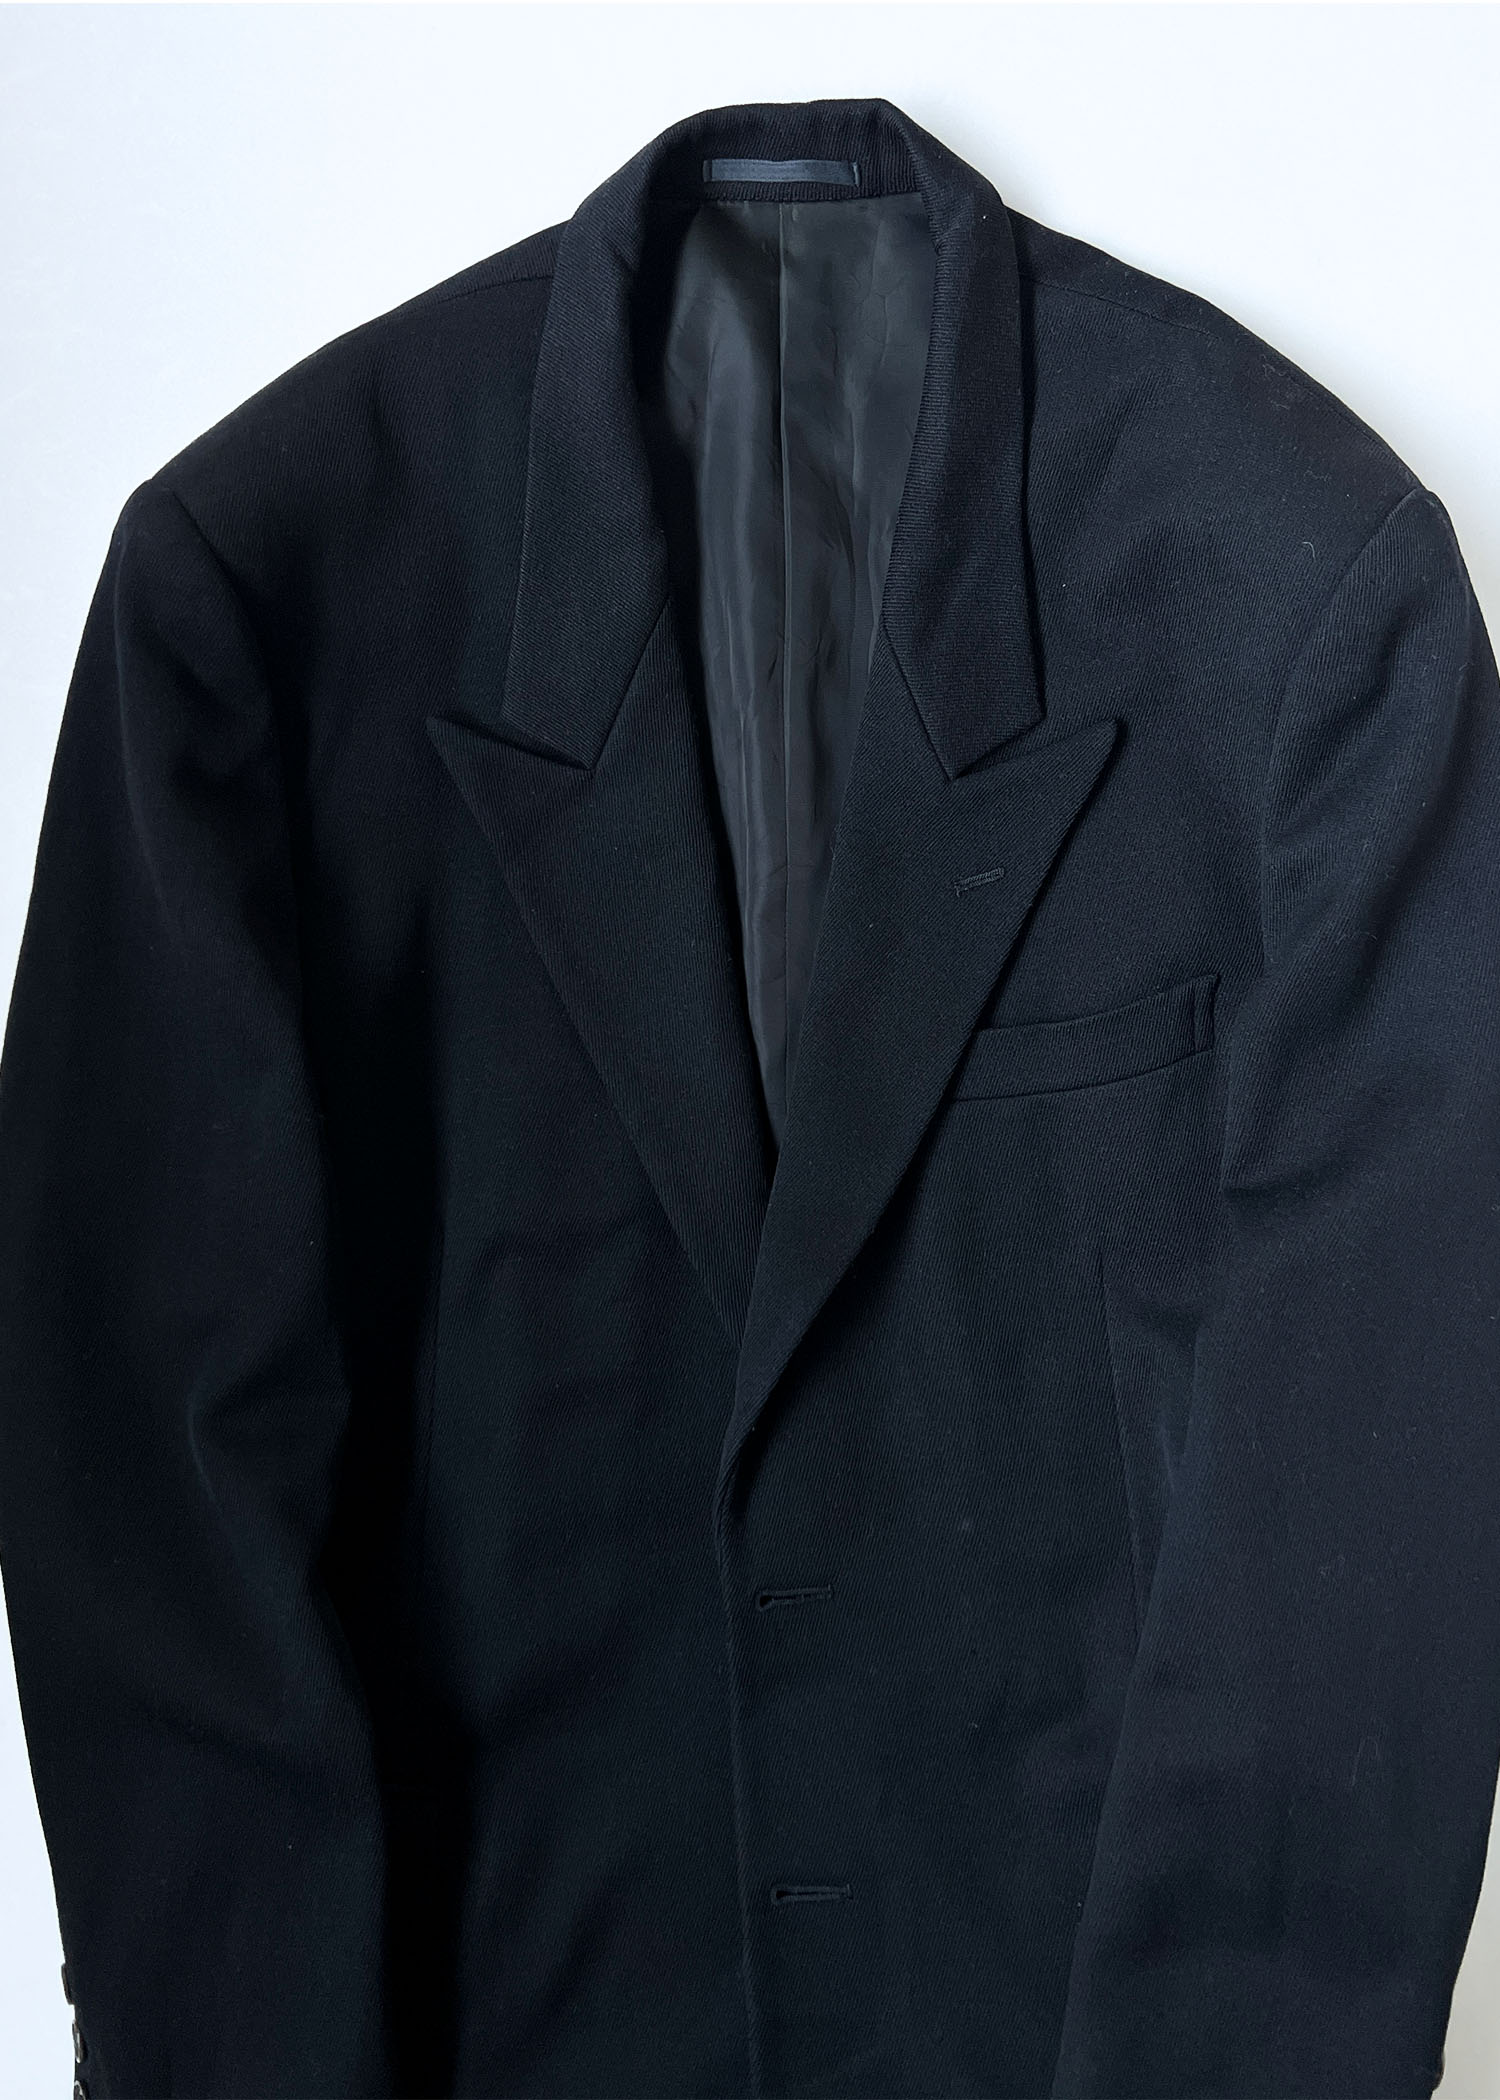 ATLIER SAB black jacket